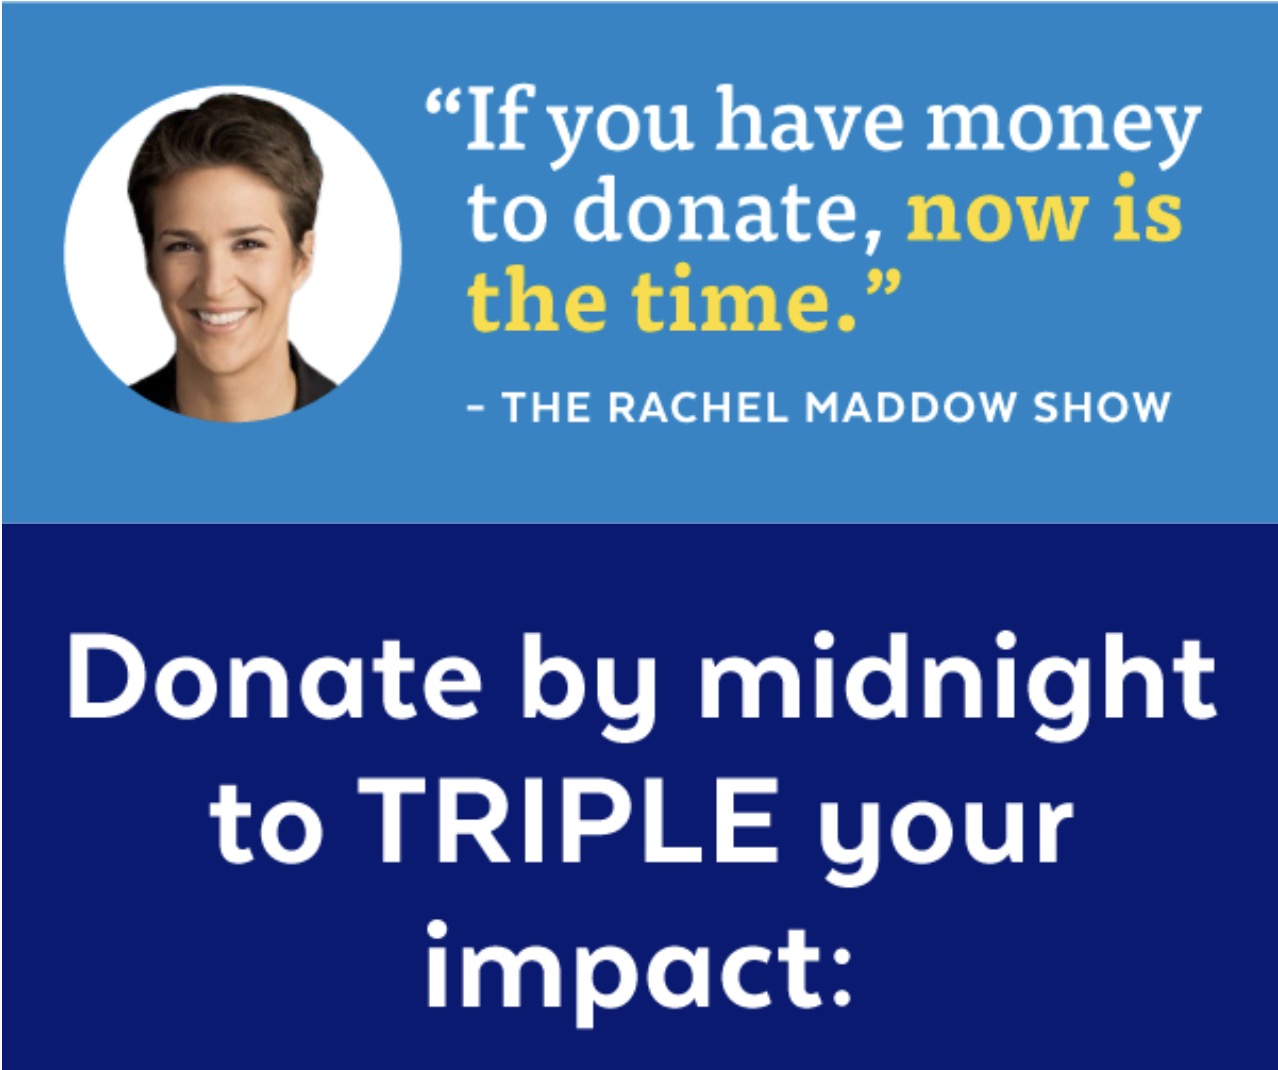 Rachel Maddow quote used in DSCC fundraising plea